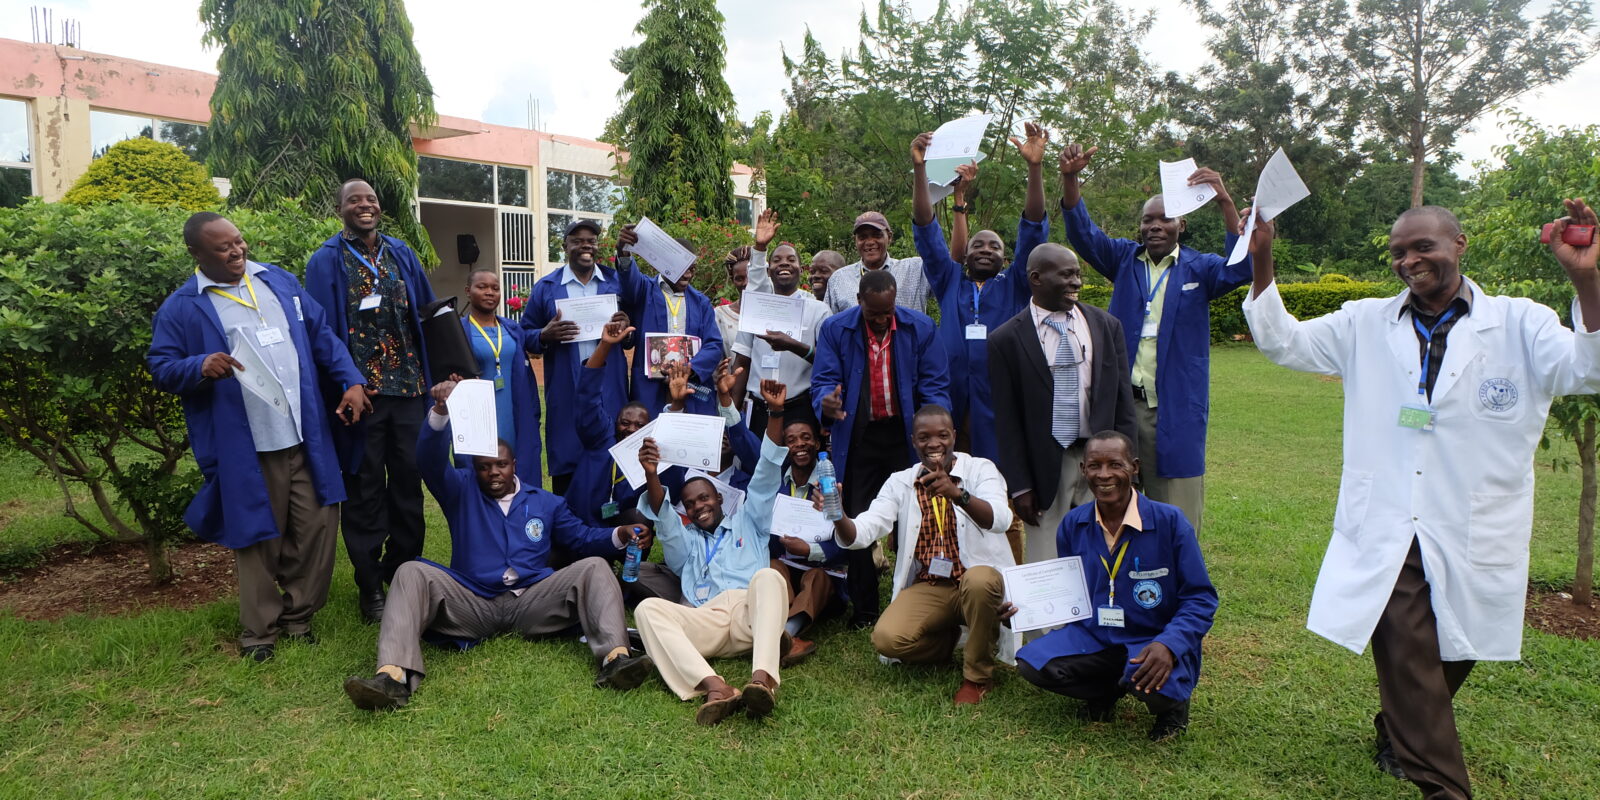 Fortbildungsprogramm in Uganda